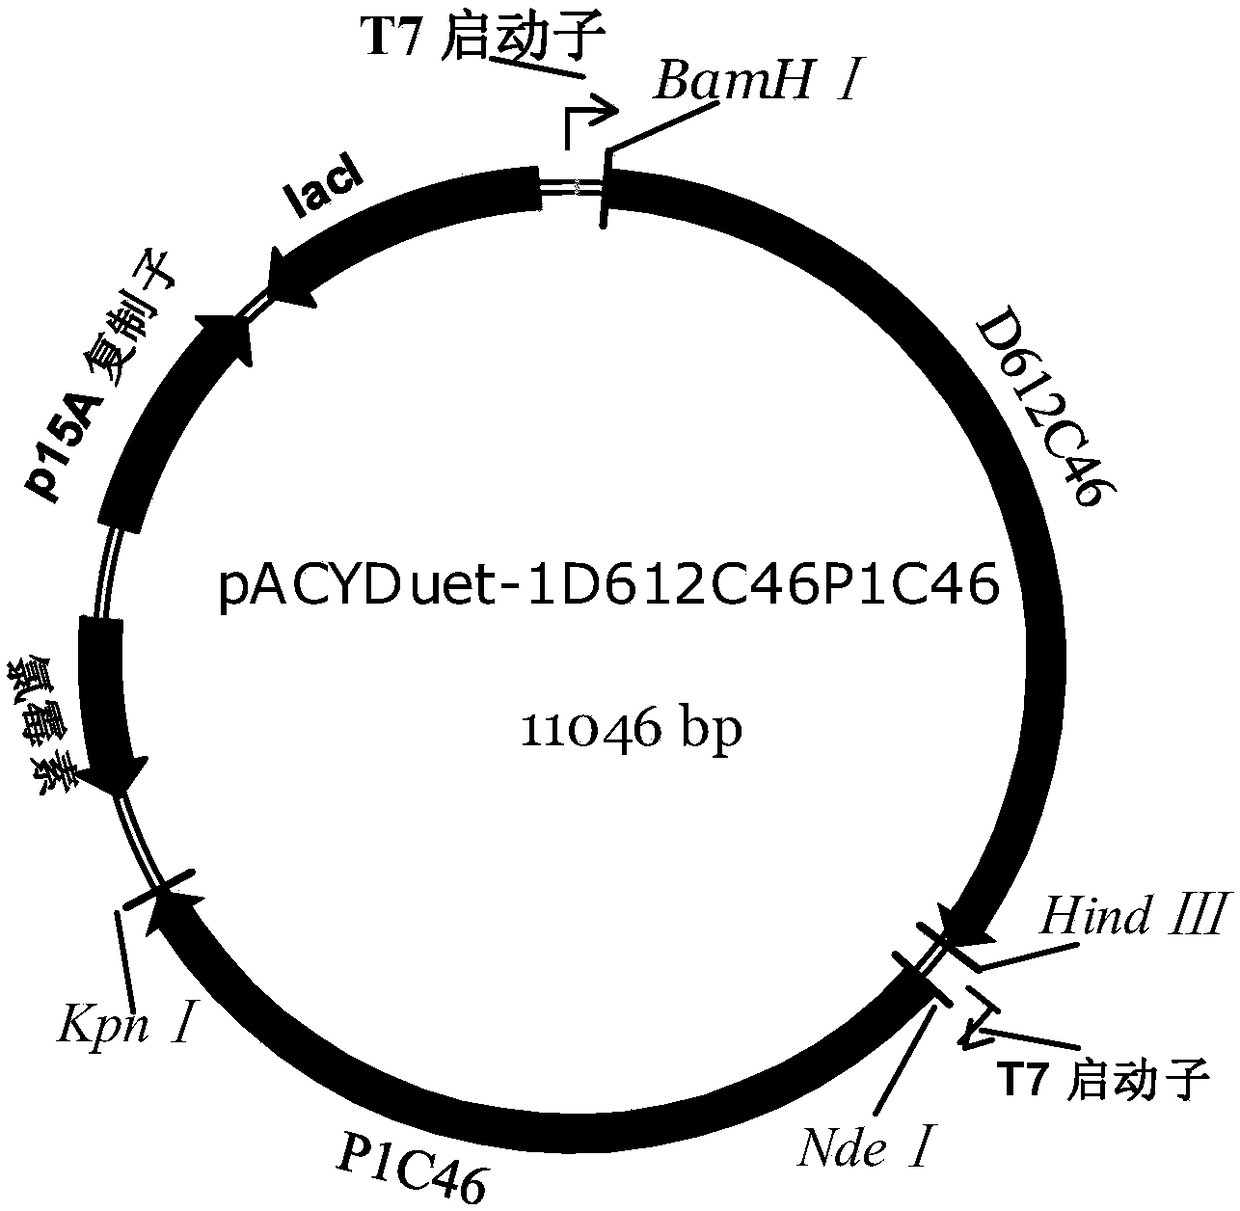 Genetic engineering bacterium and method for producing protopanaxadiol